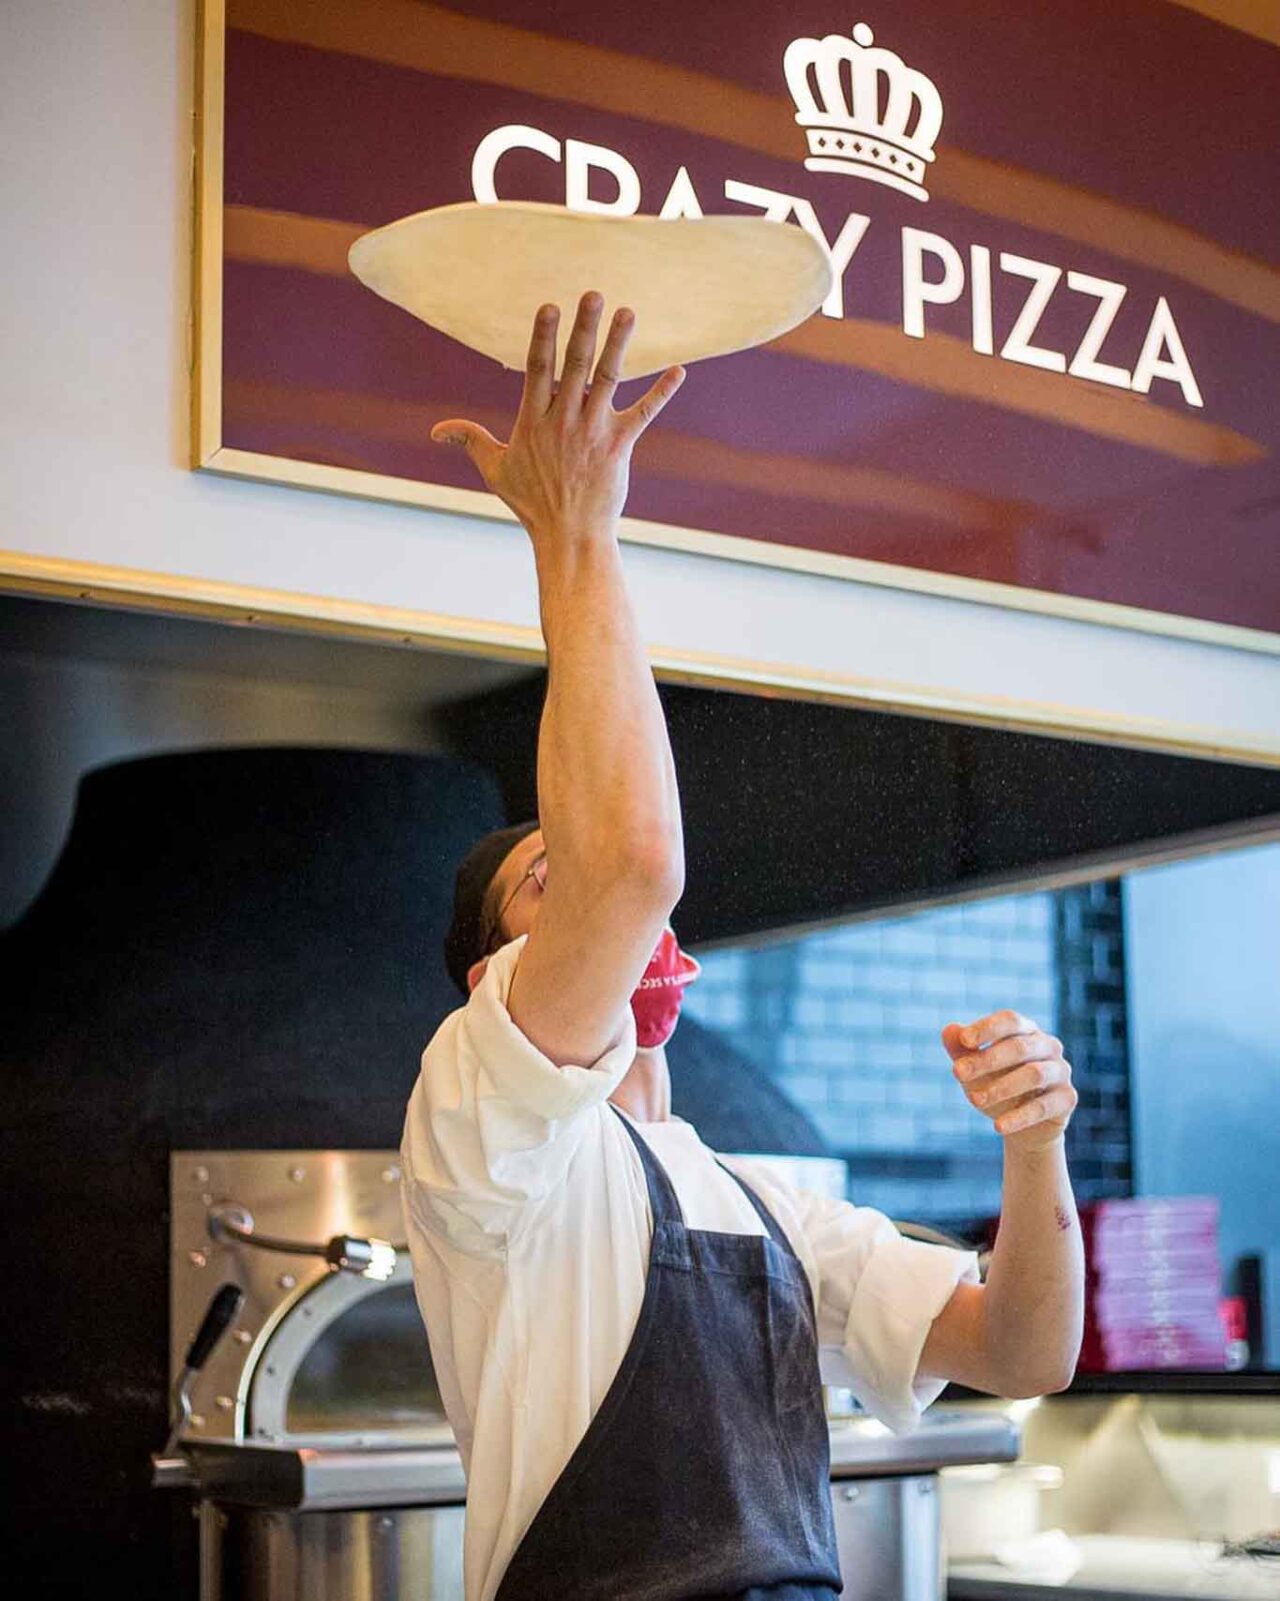 Crazy pizza pizzaiolo acrobatico